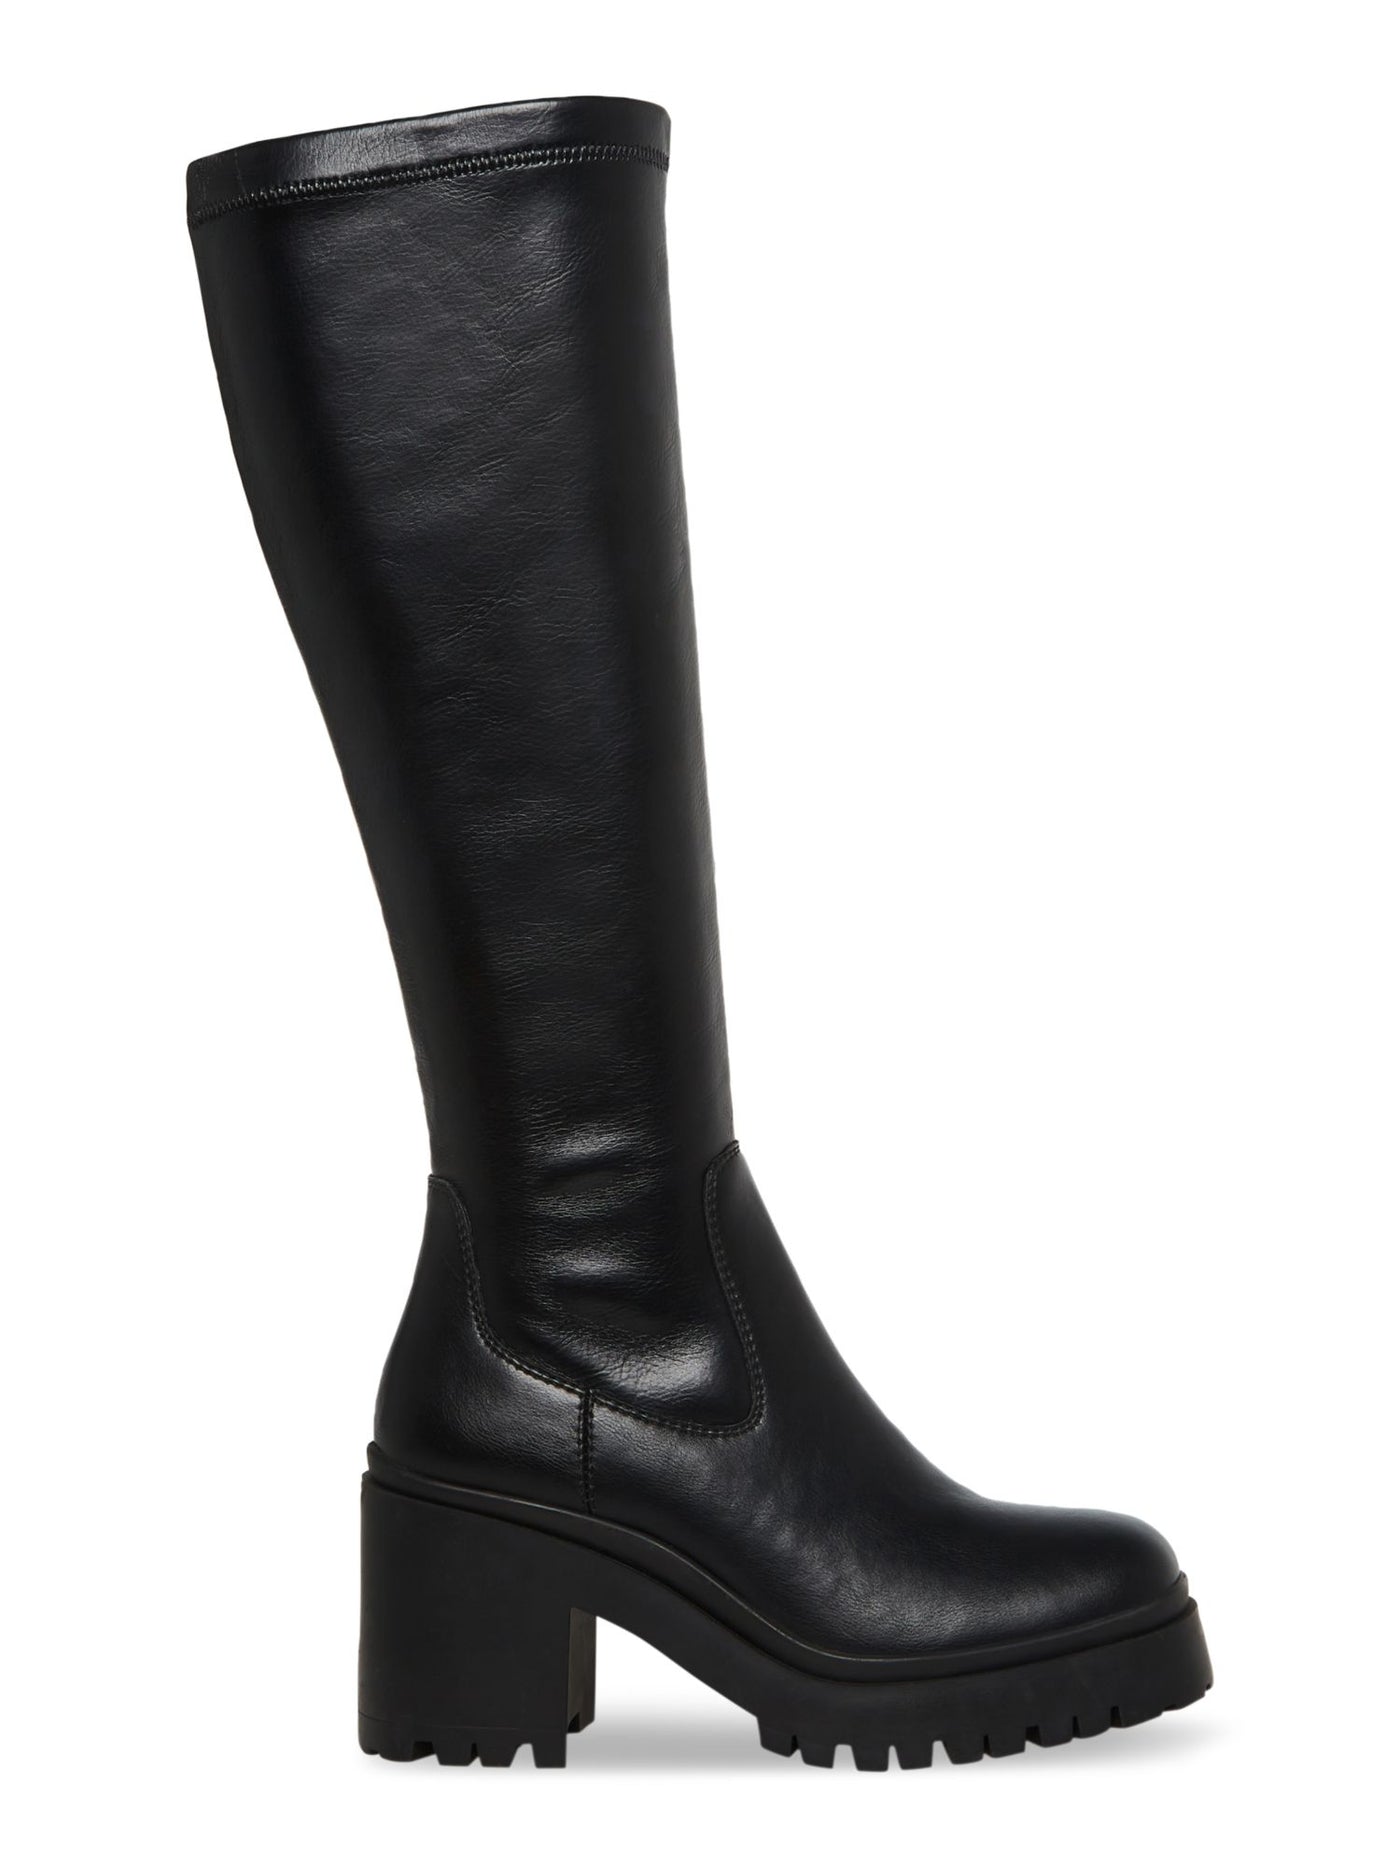 AQUA COLLEGE Womens Black 1" Platform Waterproof Stretch Ria Round Toe Block Heel Zip-Up Dress Boots 8.5 M